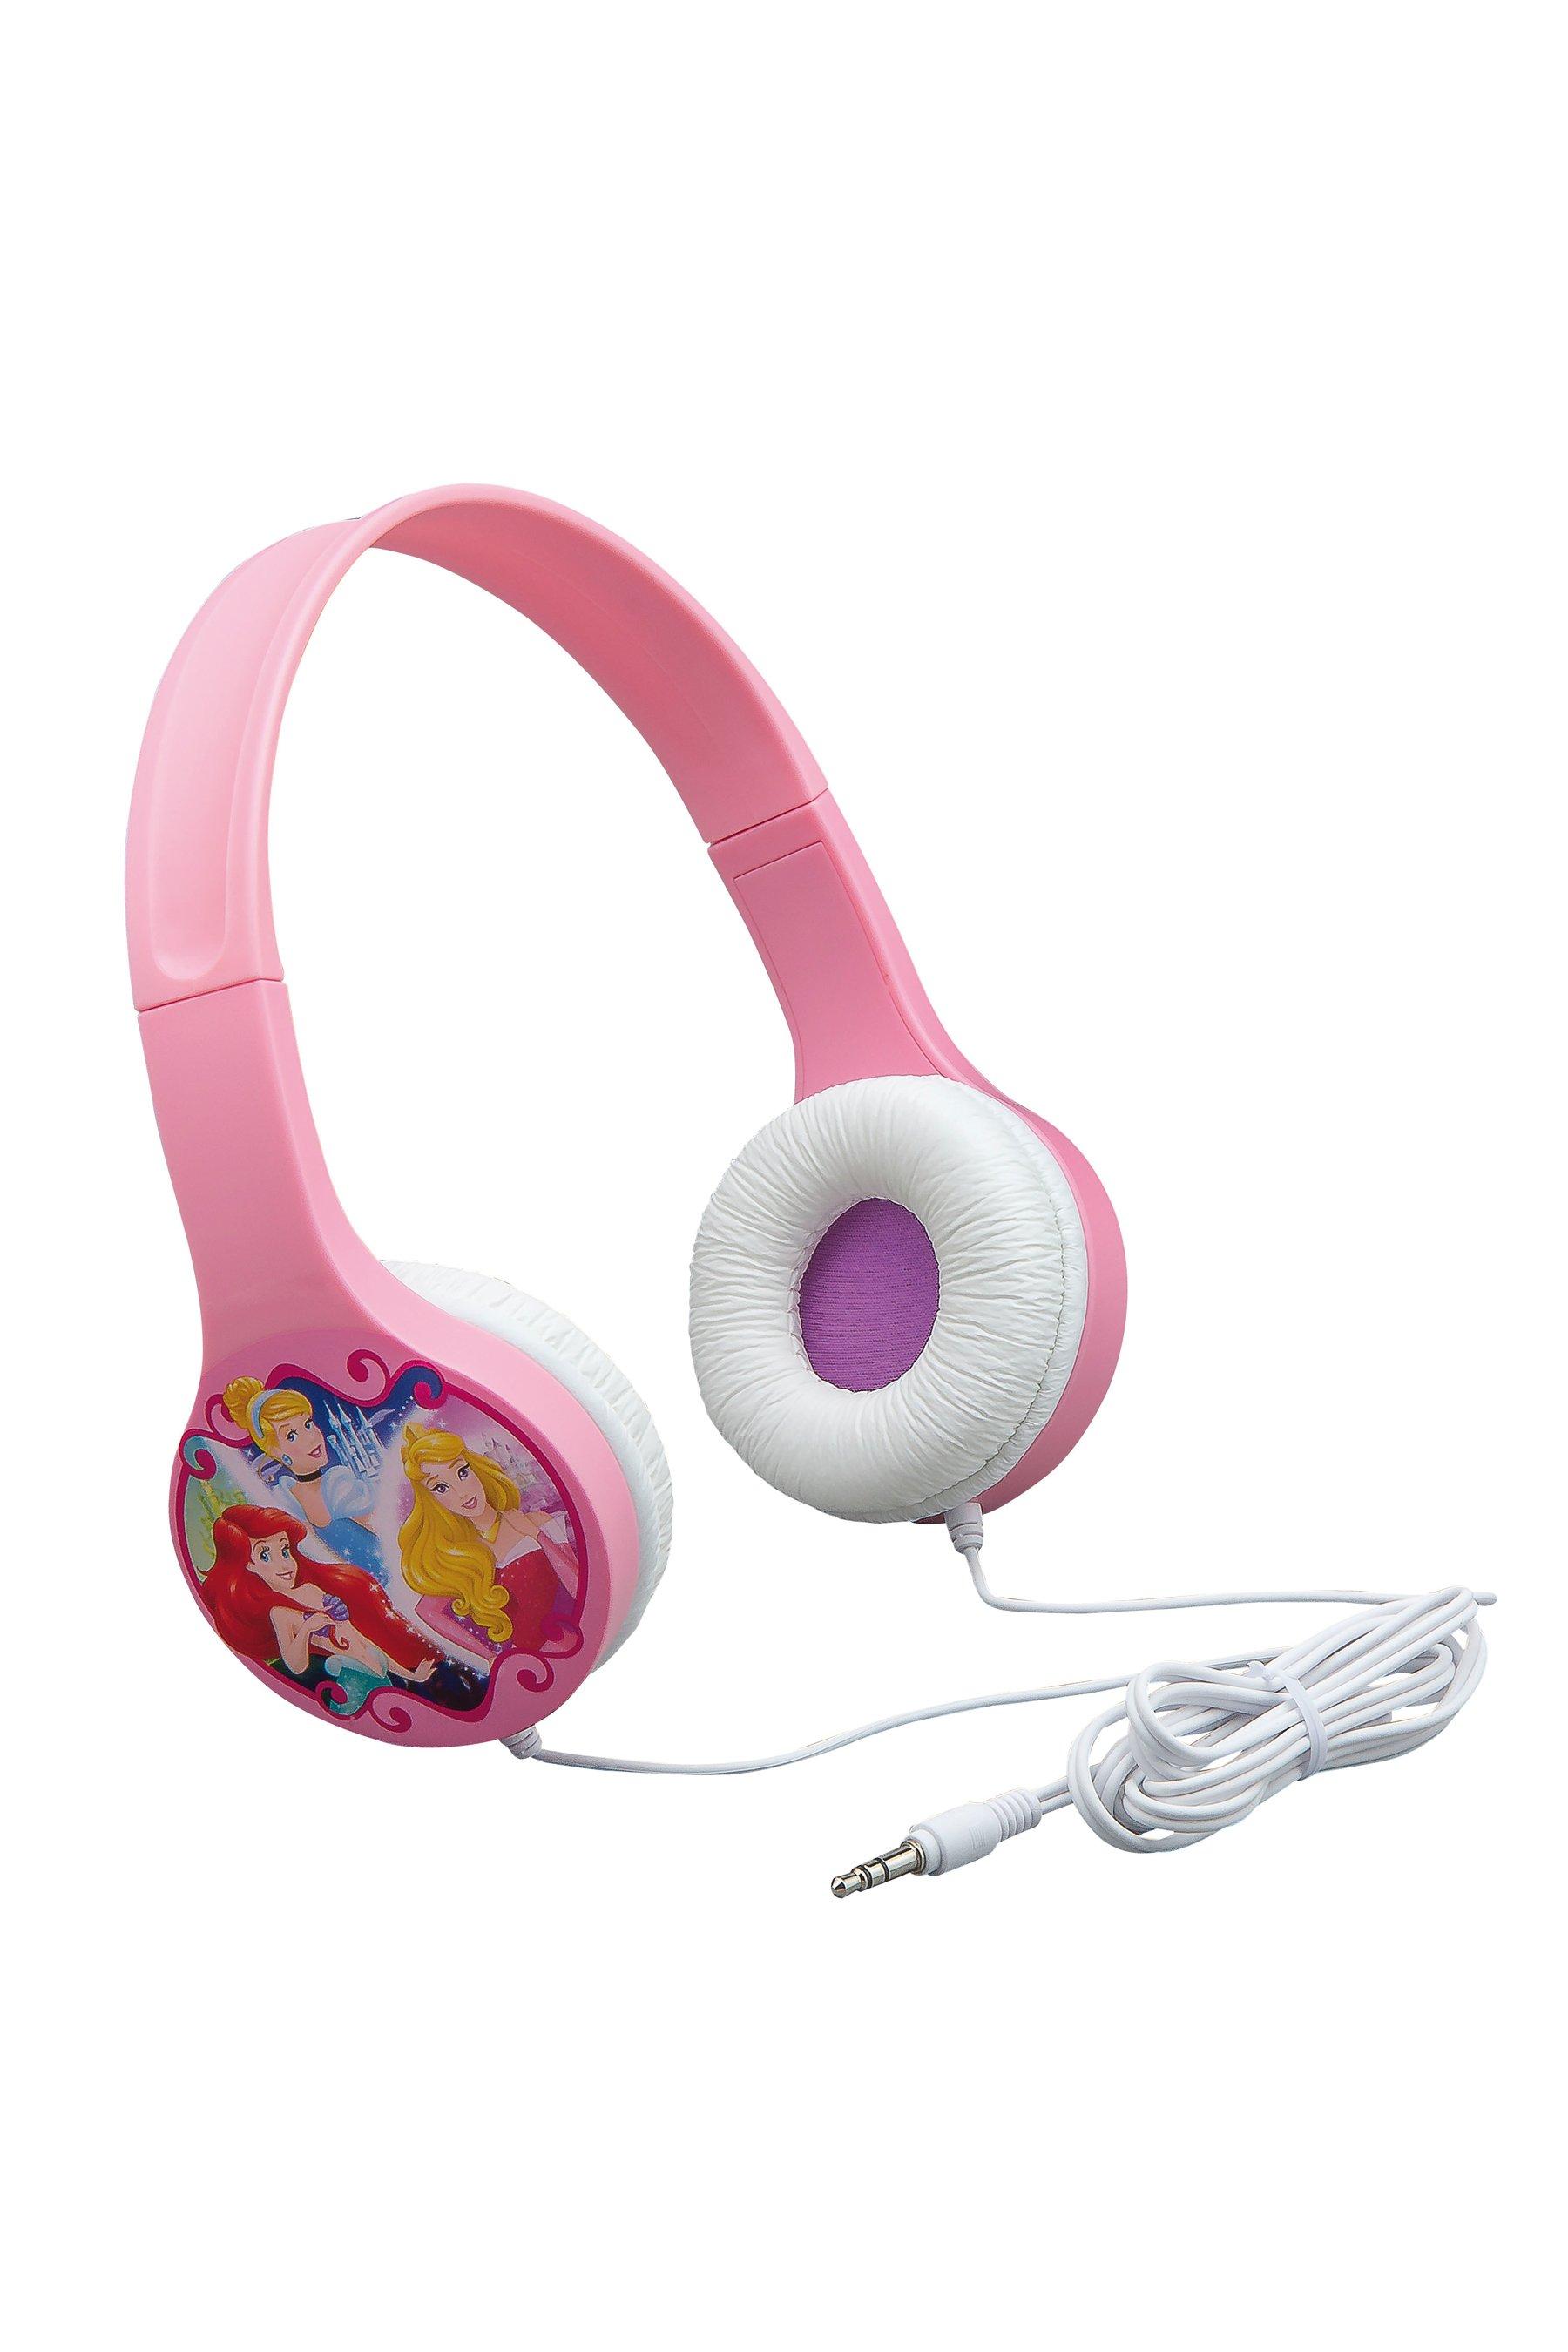 disney princess wired headphones